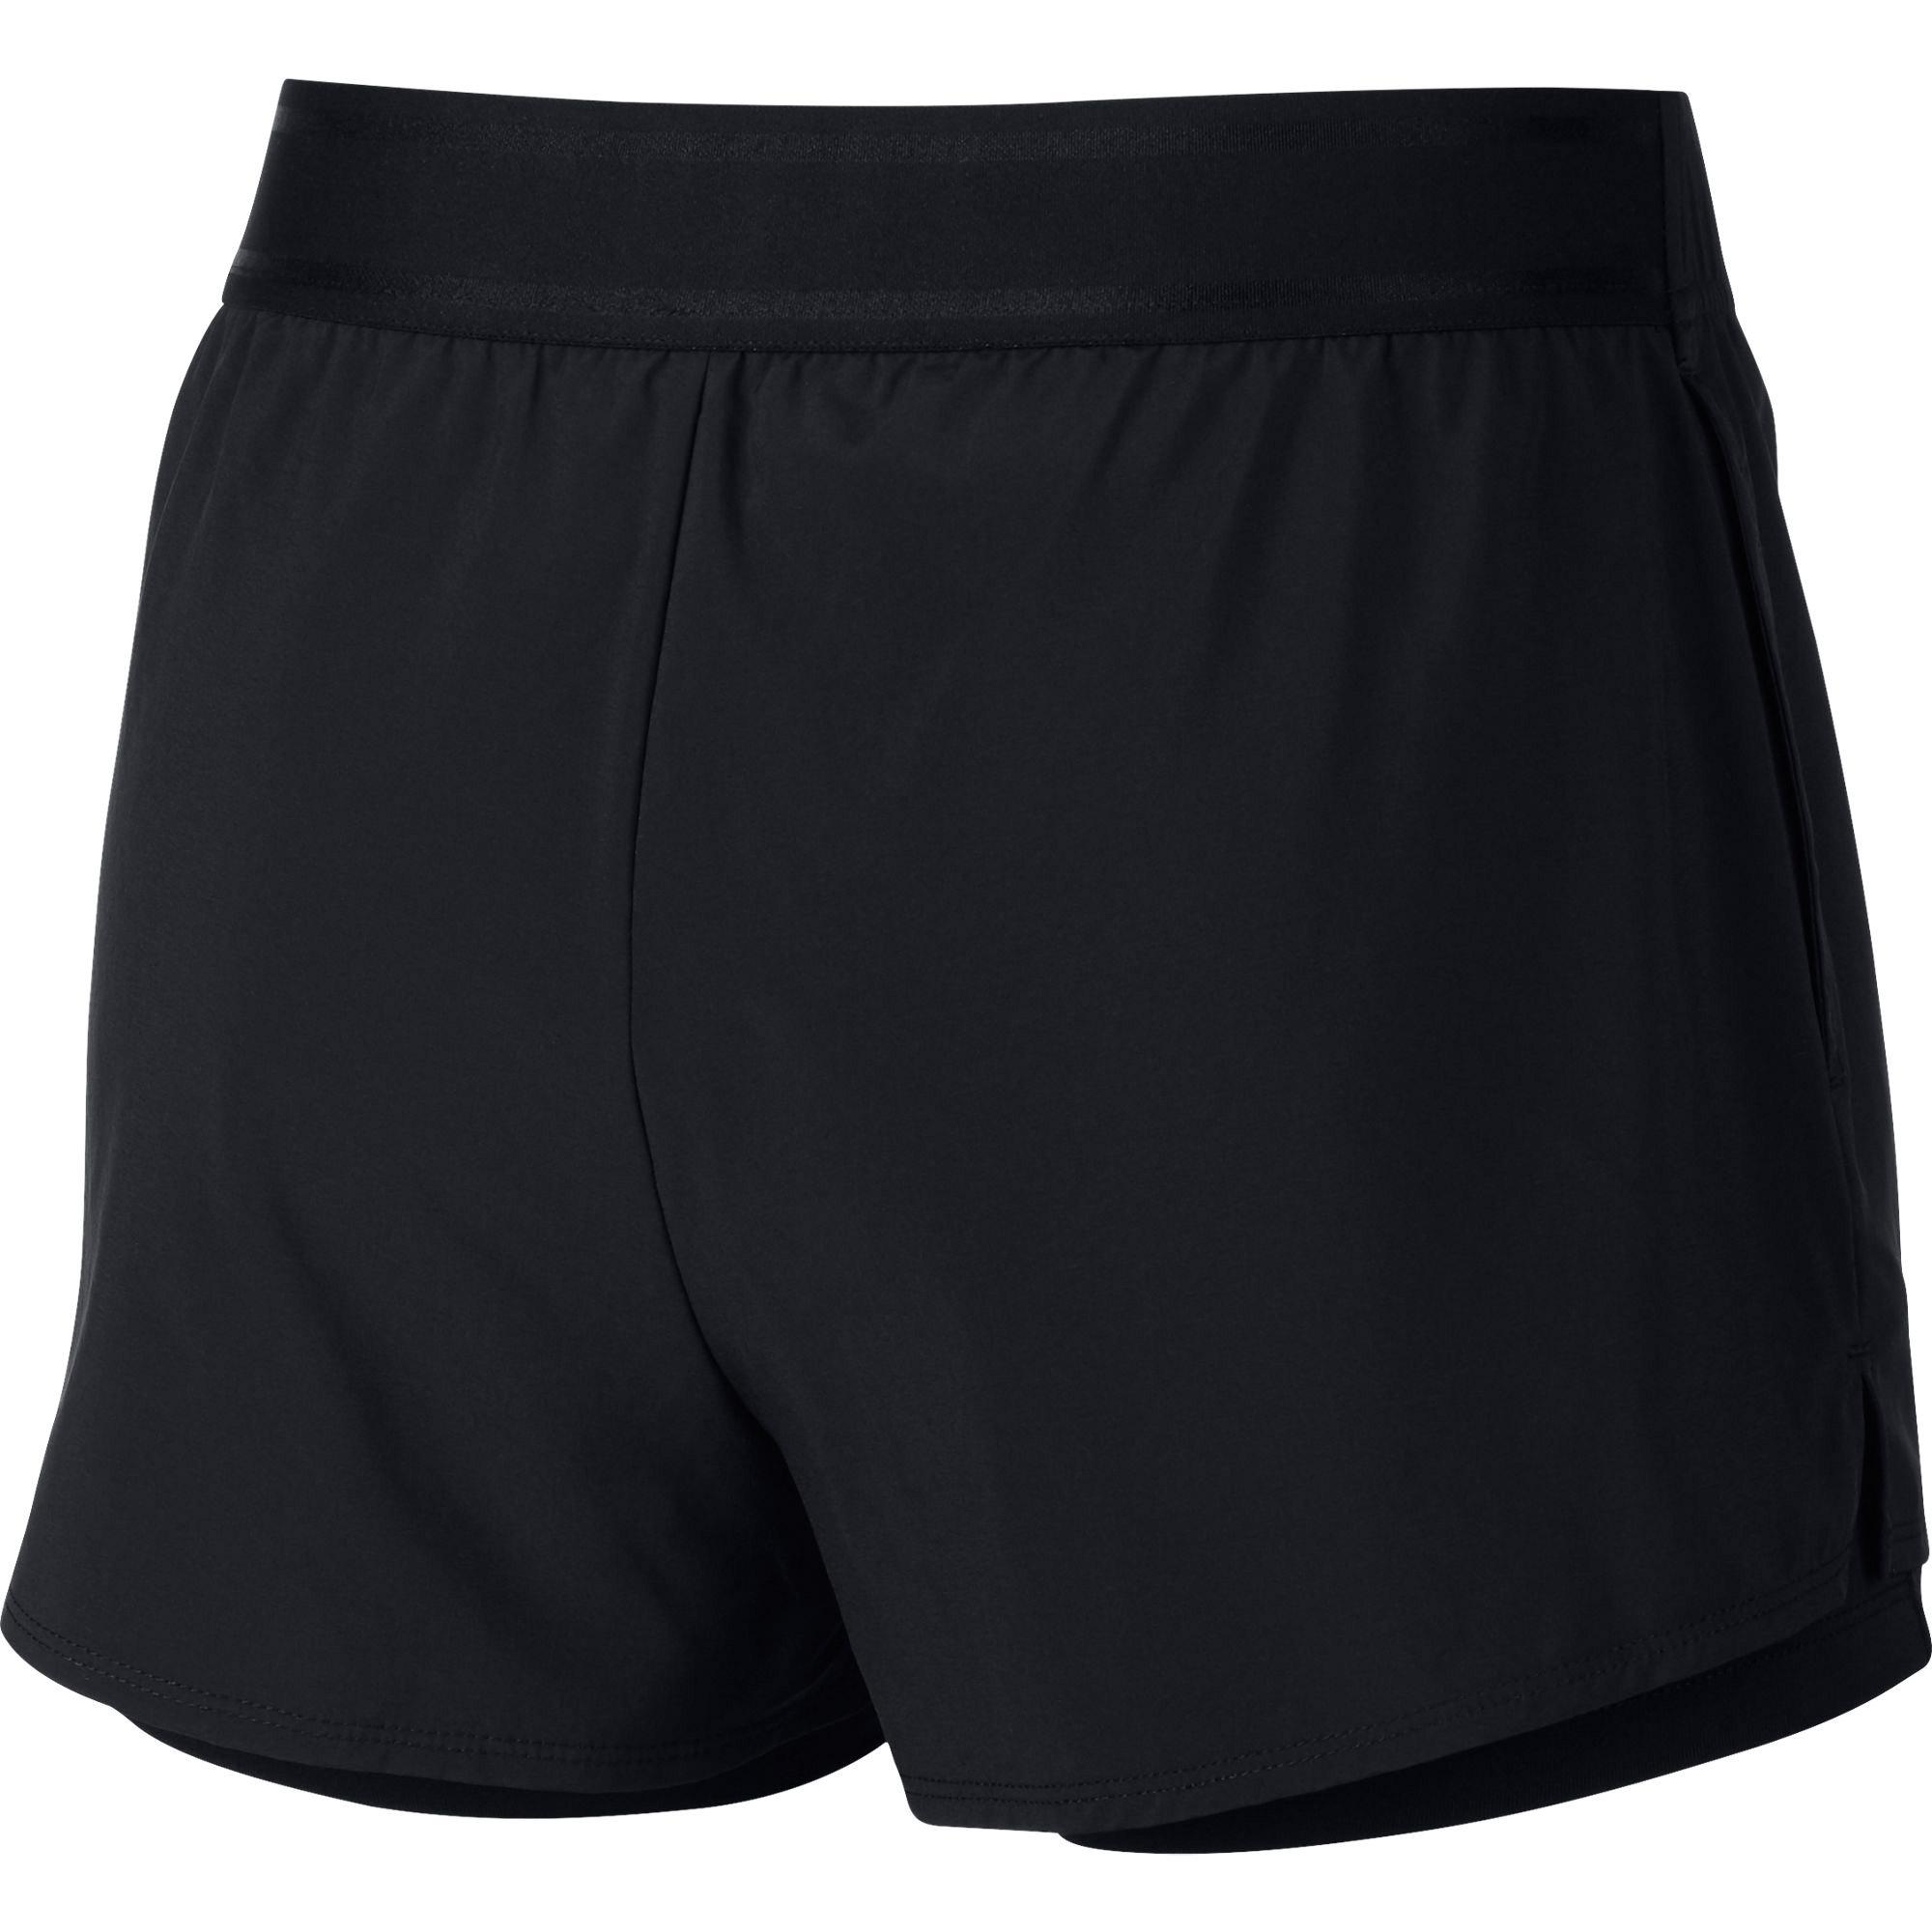 Nike Womens Flex Tennis Shorts - Black - Tennisnuts.com